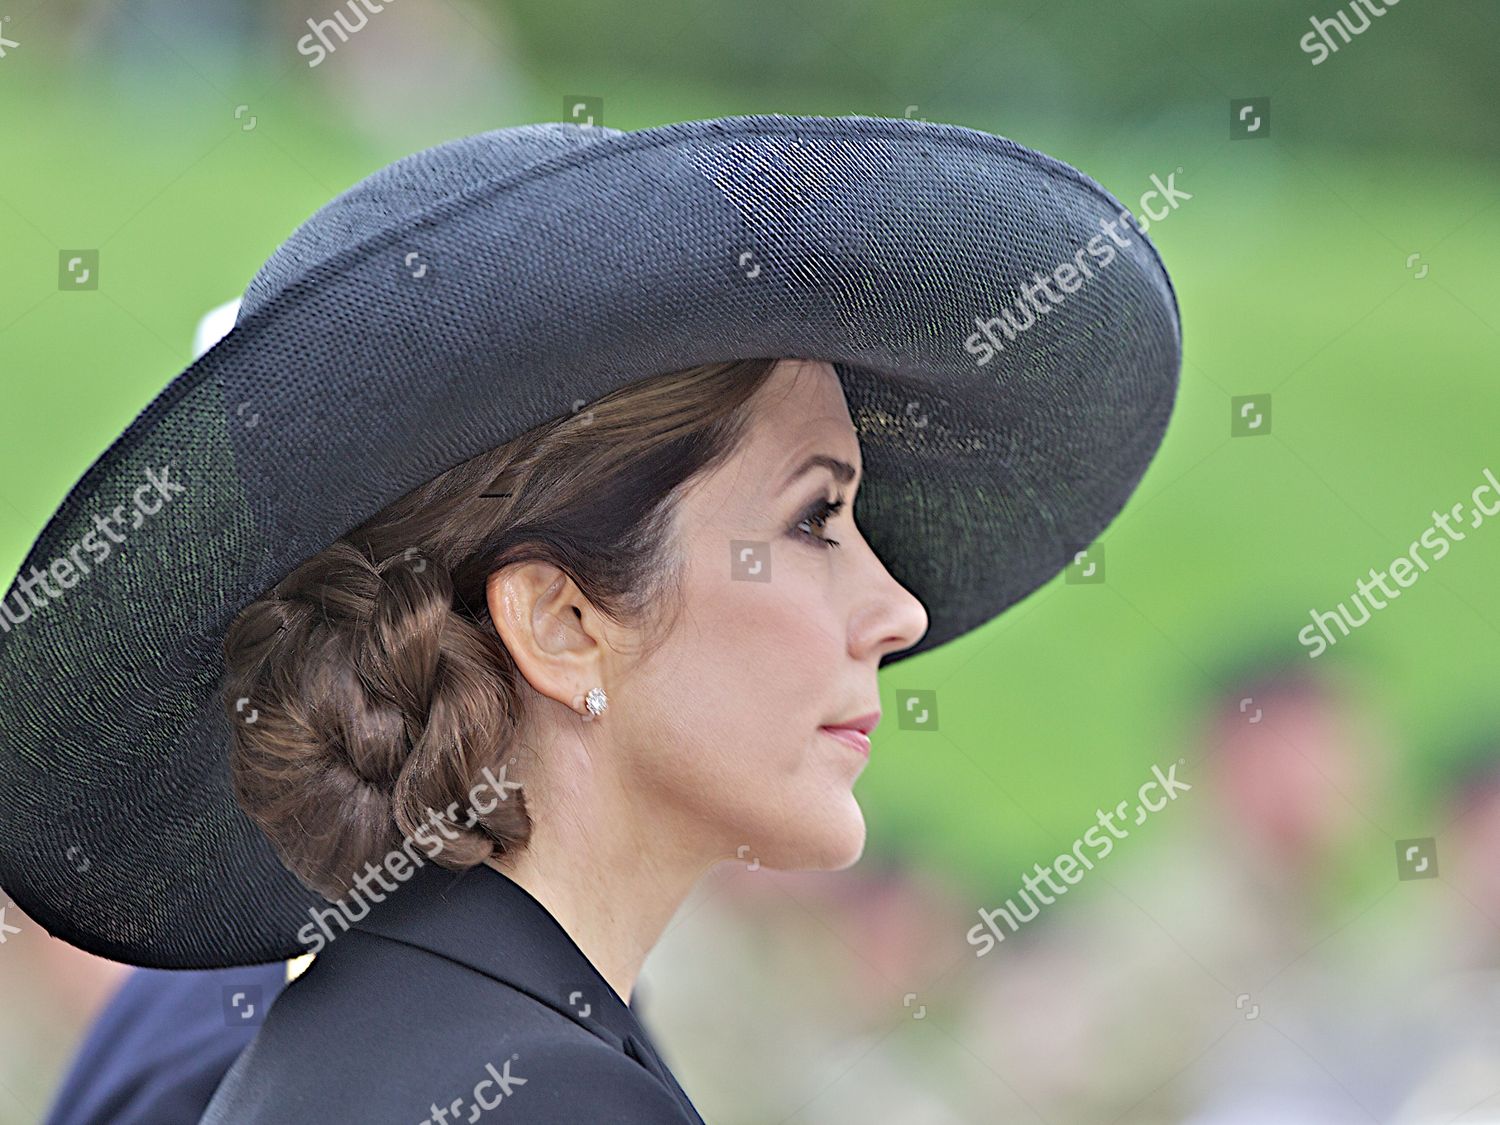 crown-princess-mary-during-a-wreath-ceremony-for-fallen-soldiers-copenhagen-denmark-shutterstock-editorial-9044255c.jpg